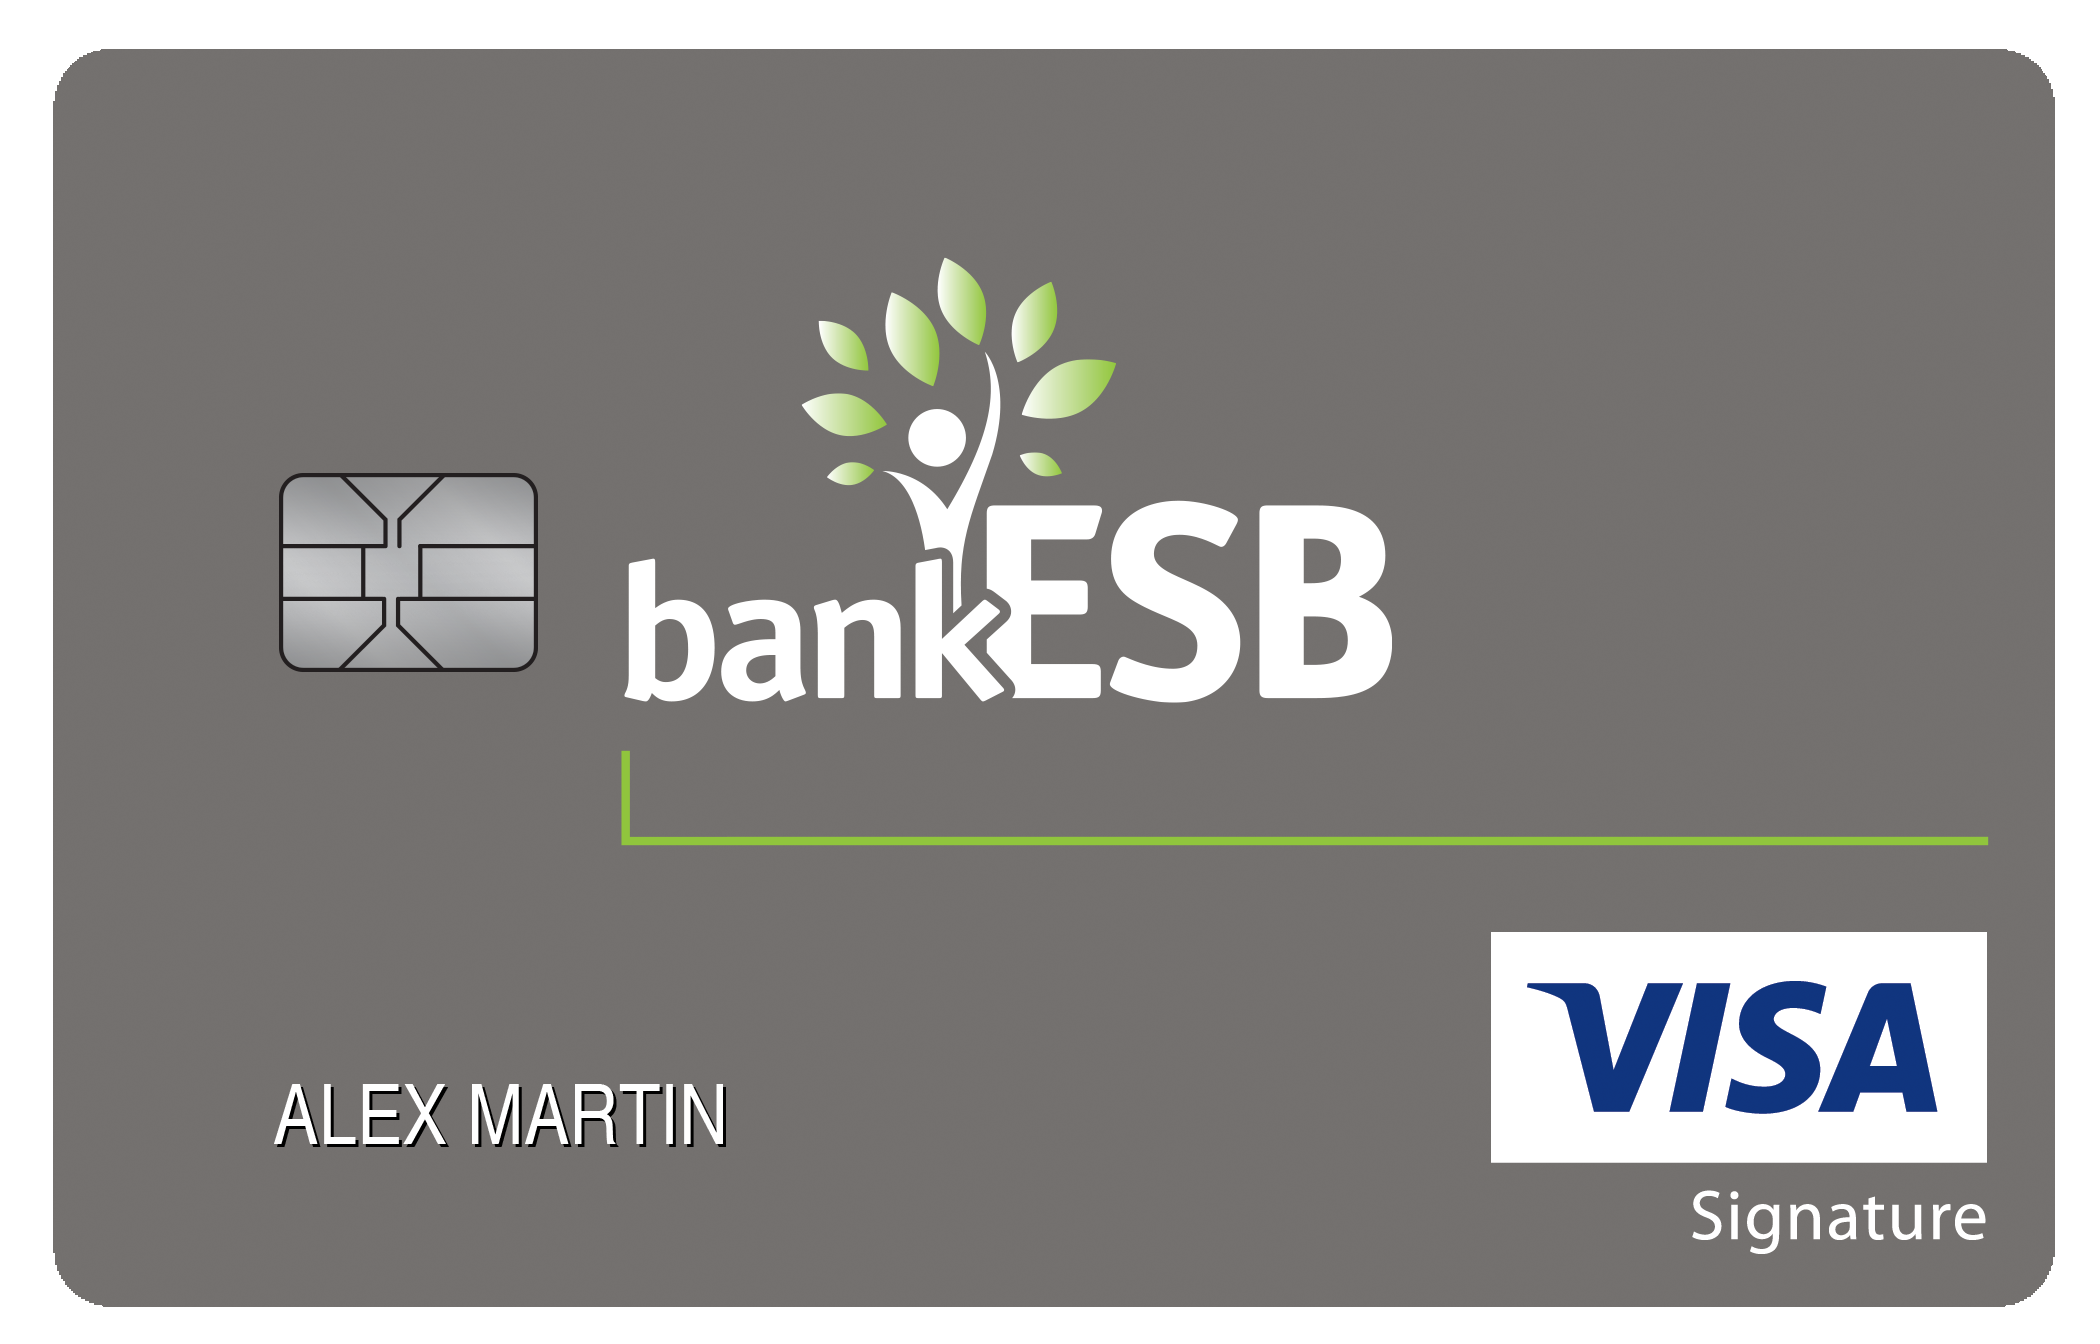 bankESB Everyday Rewards+ Card